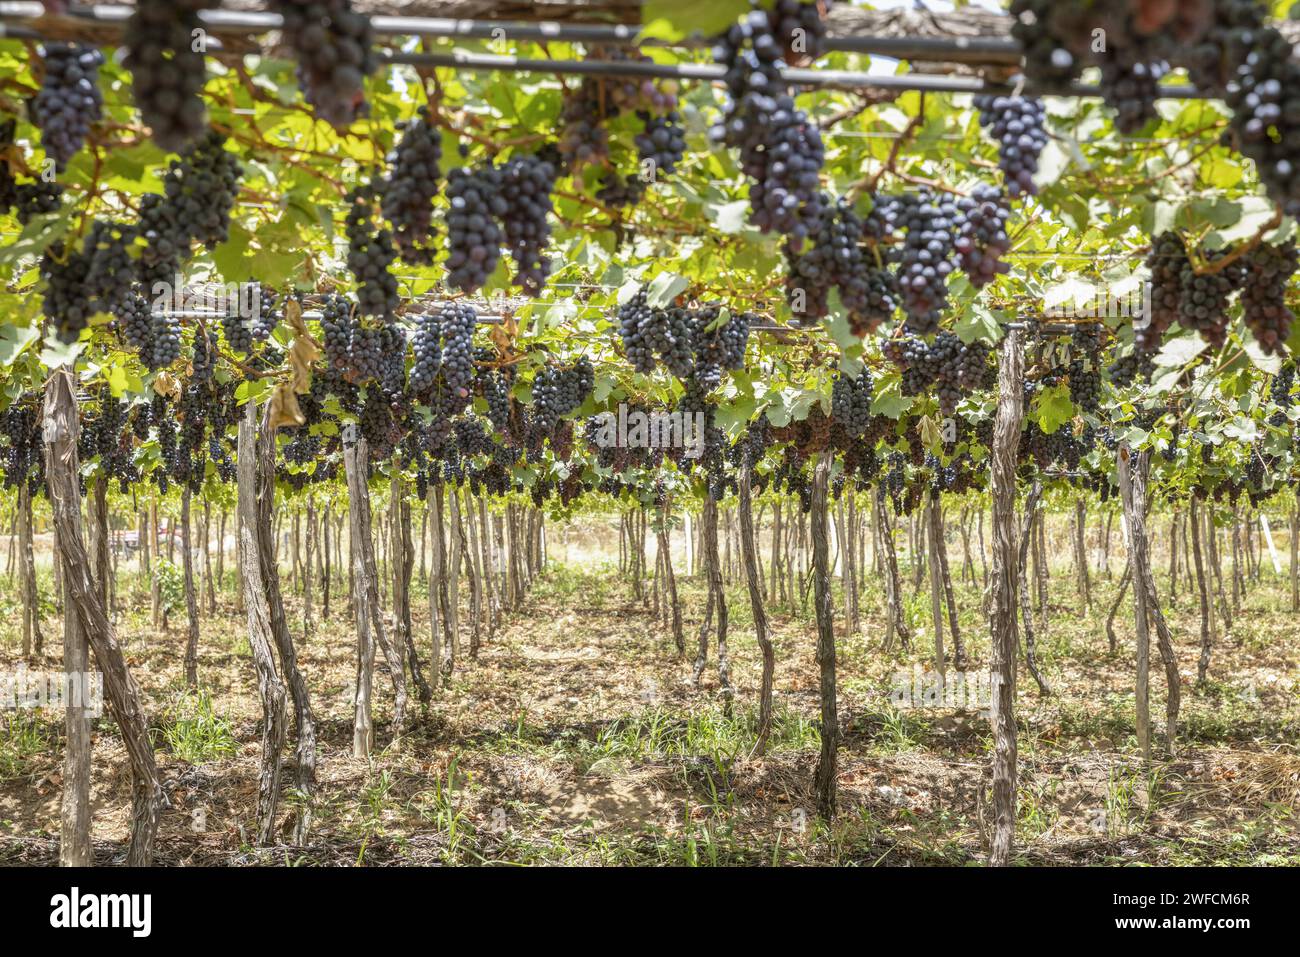 Plantation de raisins Victory dans le projet d'irrigation Nilo Coelho N8 - Vallée de São Francisco - Banque D'Images